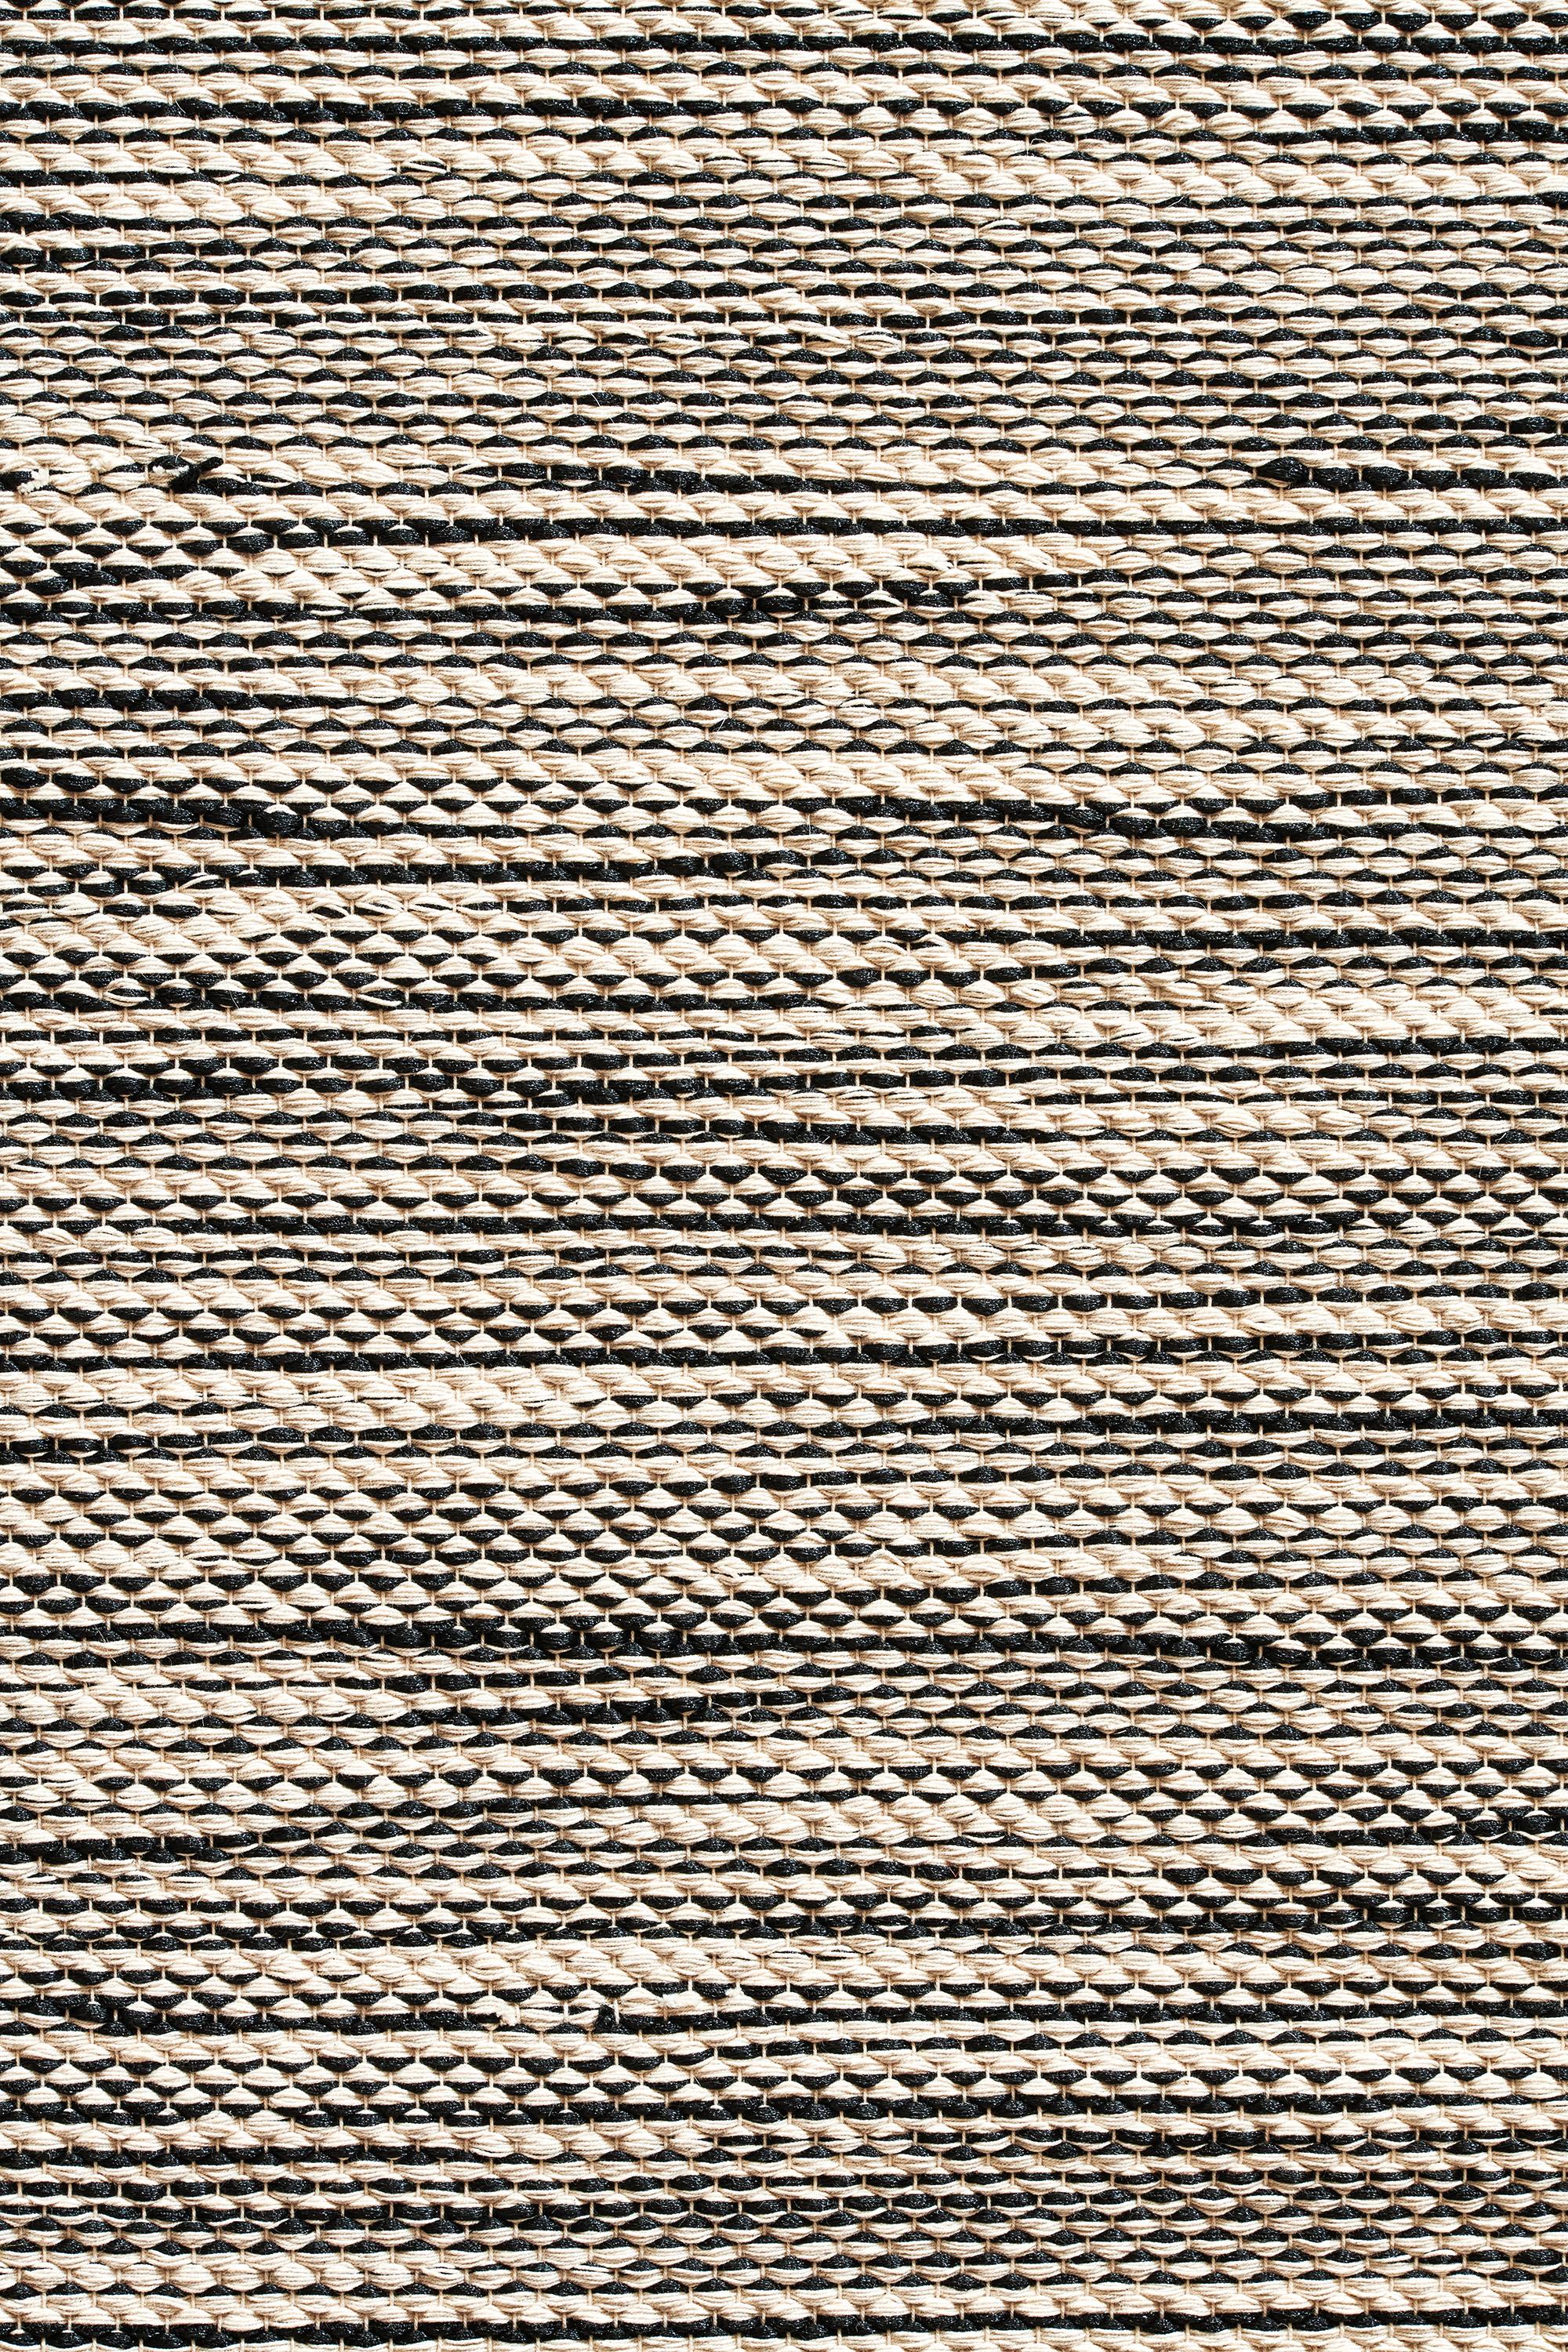 Israeli 'Rivers' 300x400 cm Handmade Woven Indoor Rug in Black Sand by Iota For Sale